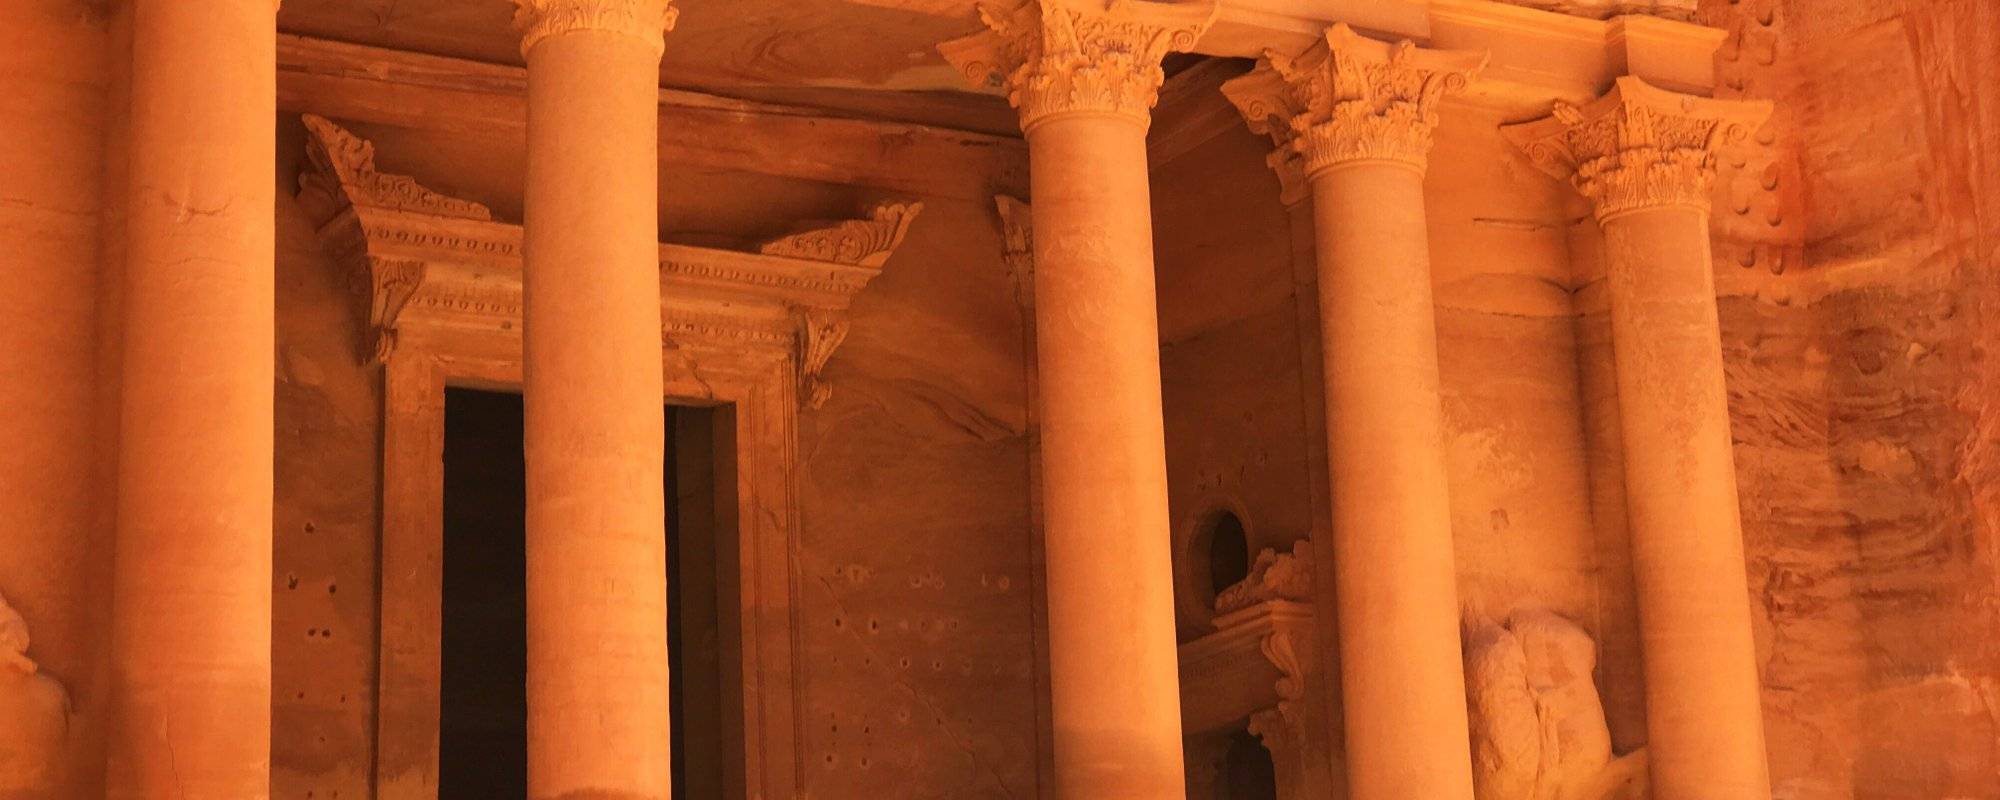 My Journey Through Petra